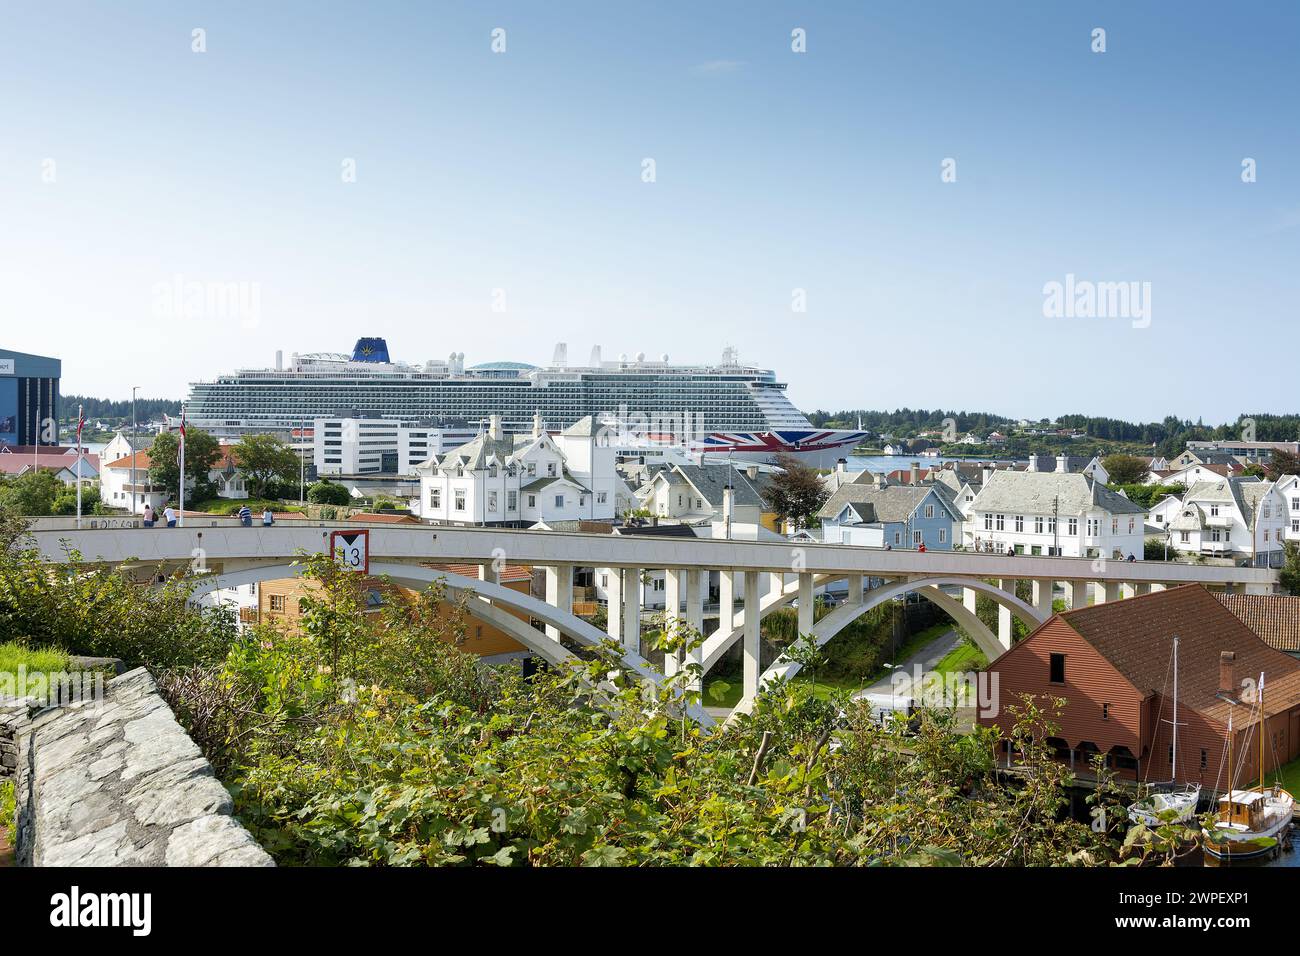 Norway: Haugesund tourist destination popular with cruise ships. MSC Iona Stock Photo